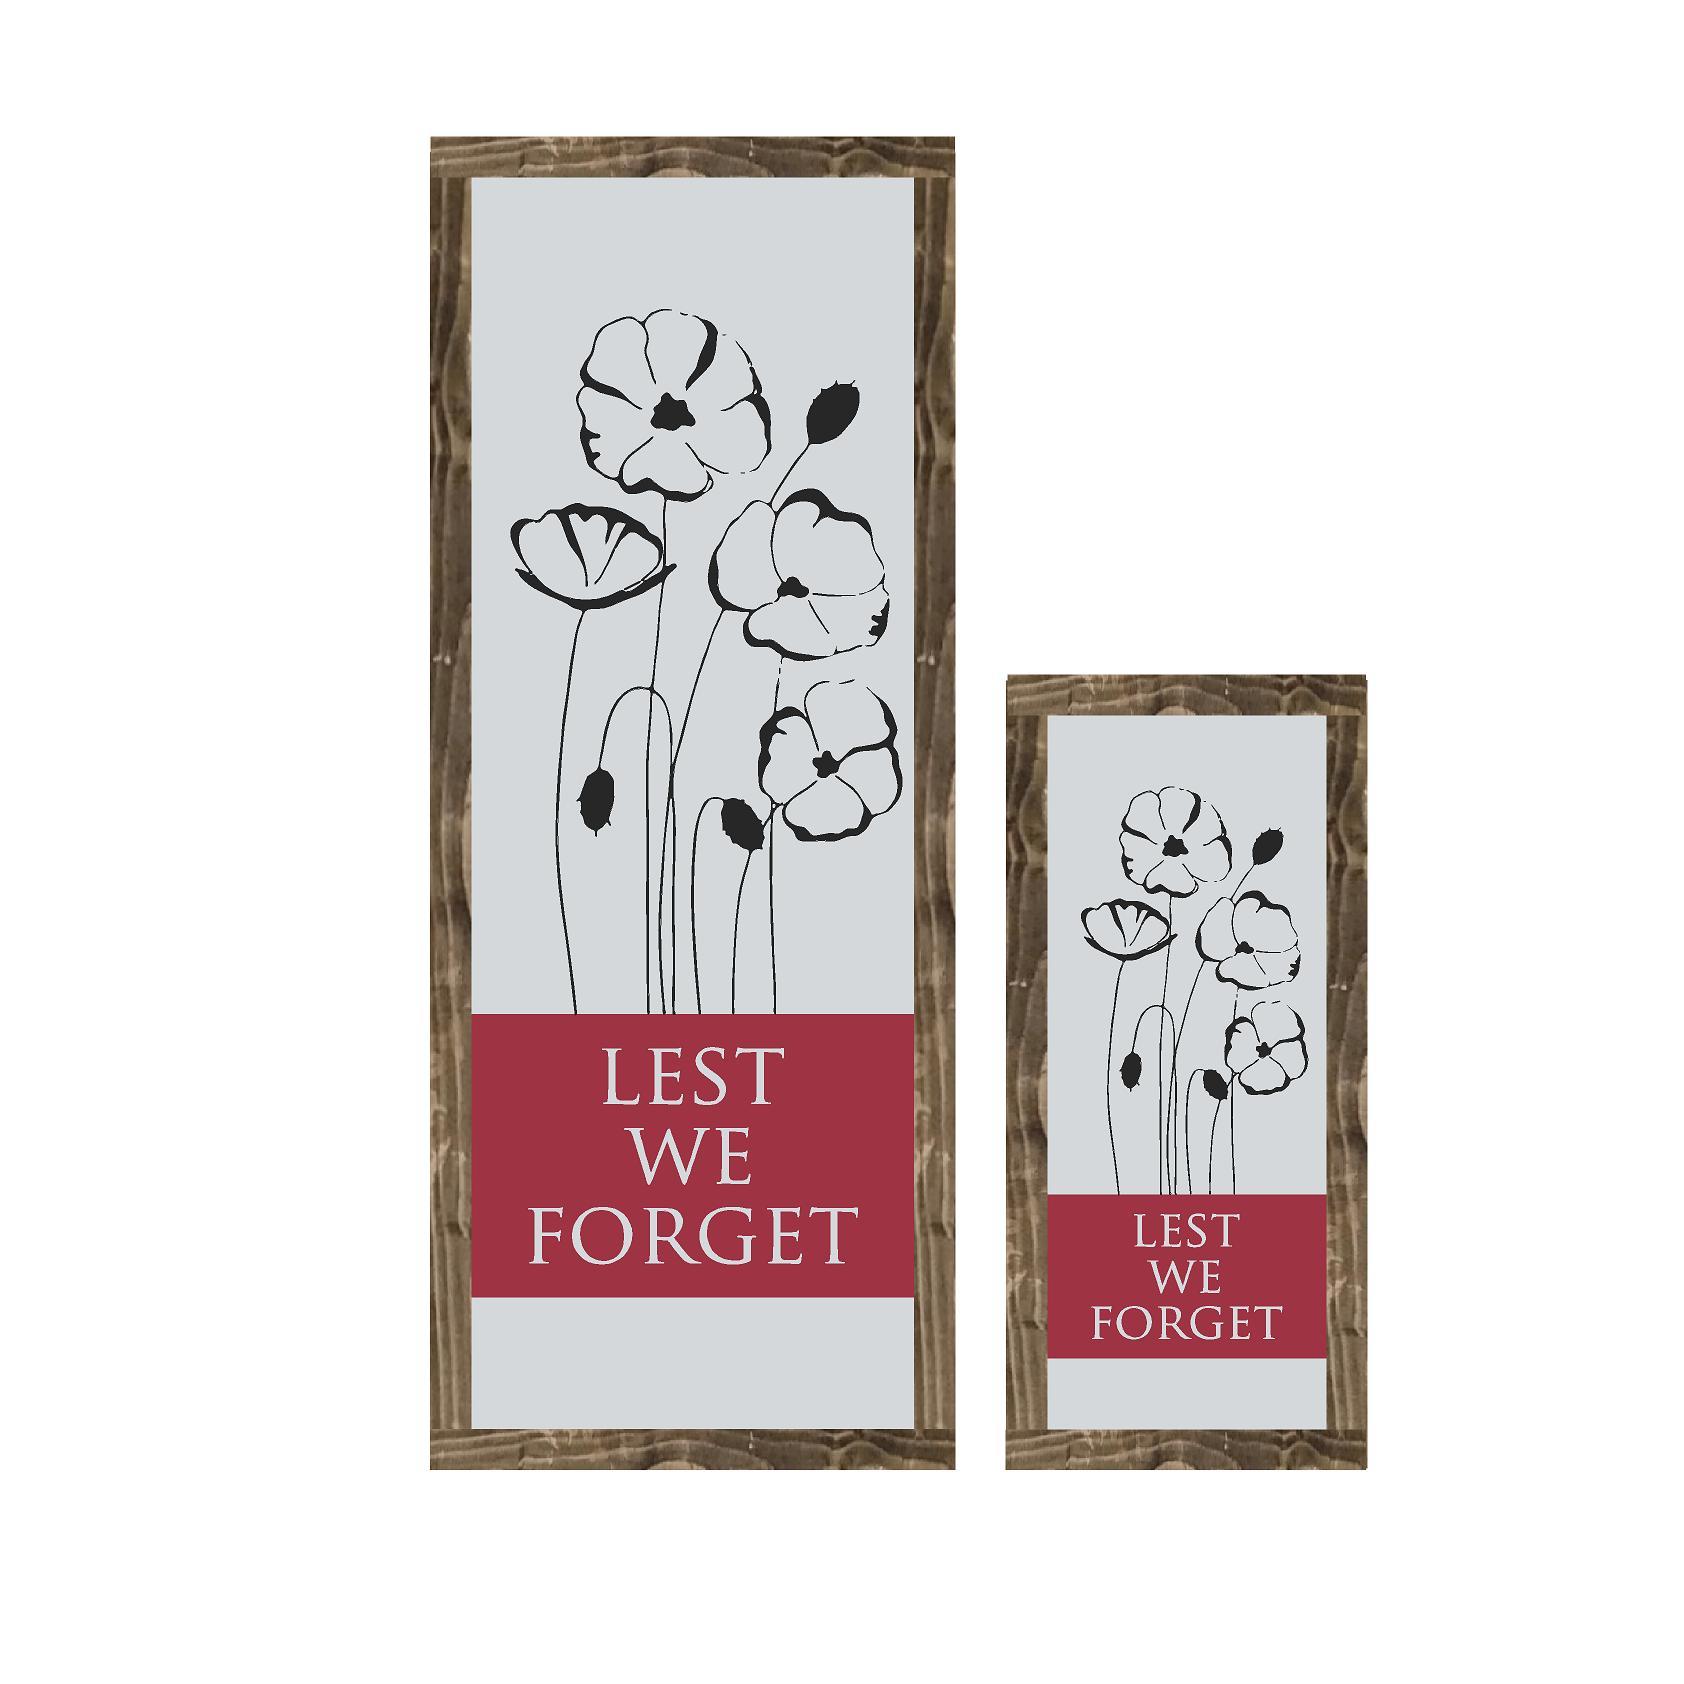 Lest We Forget | Framed Wood Sign - The Imperfect Wood Company - Framed Wood Sign